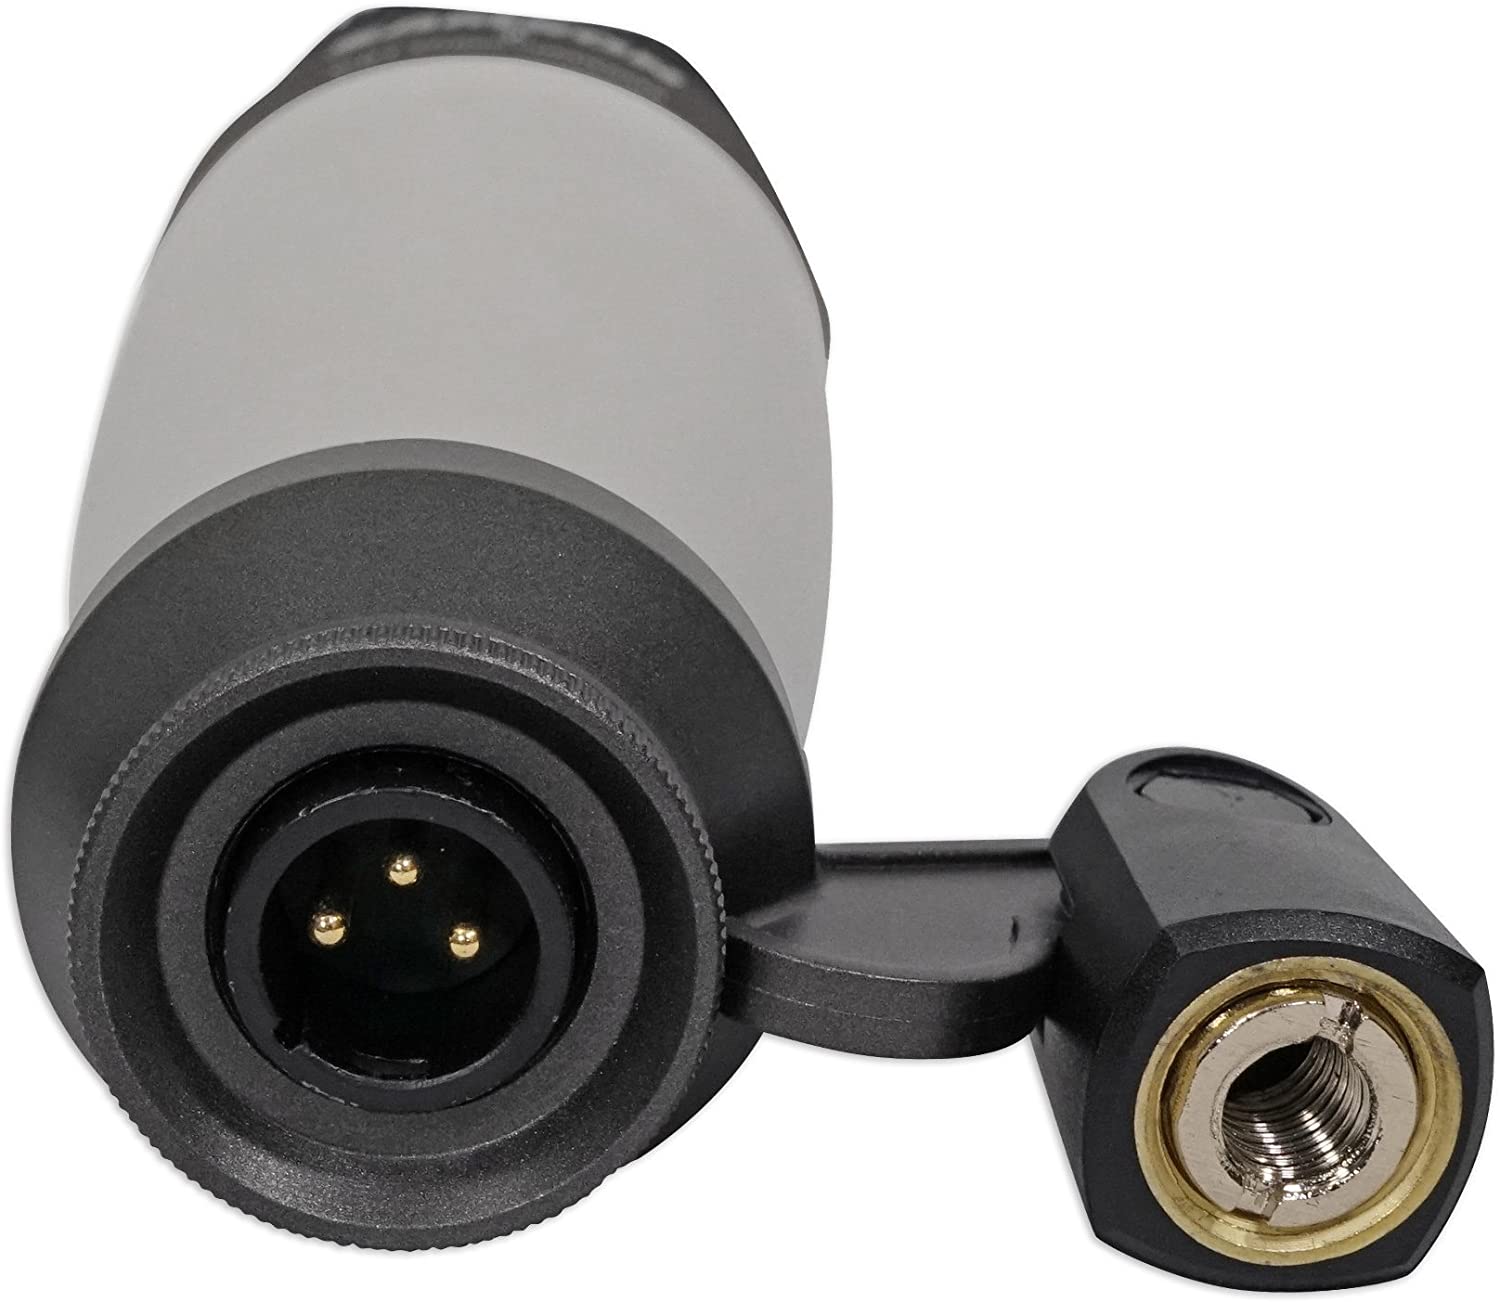 Samson C01 Large-Diaphragm Microphone and SR880 Closed-Back Headphones Bundle - Pro-Distributing